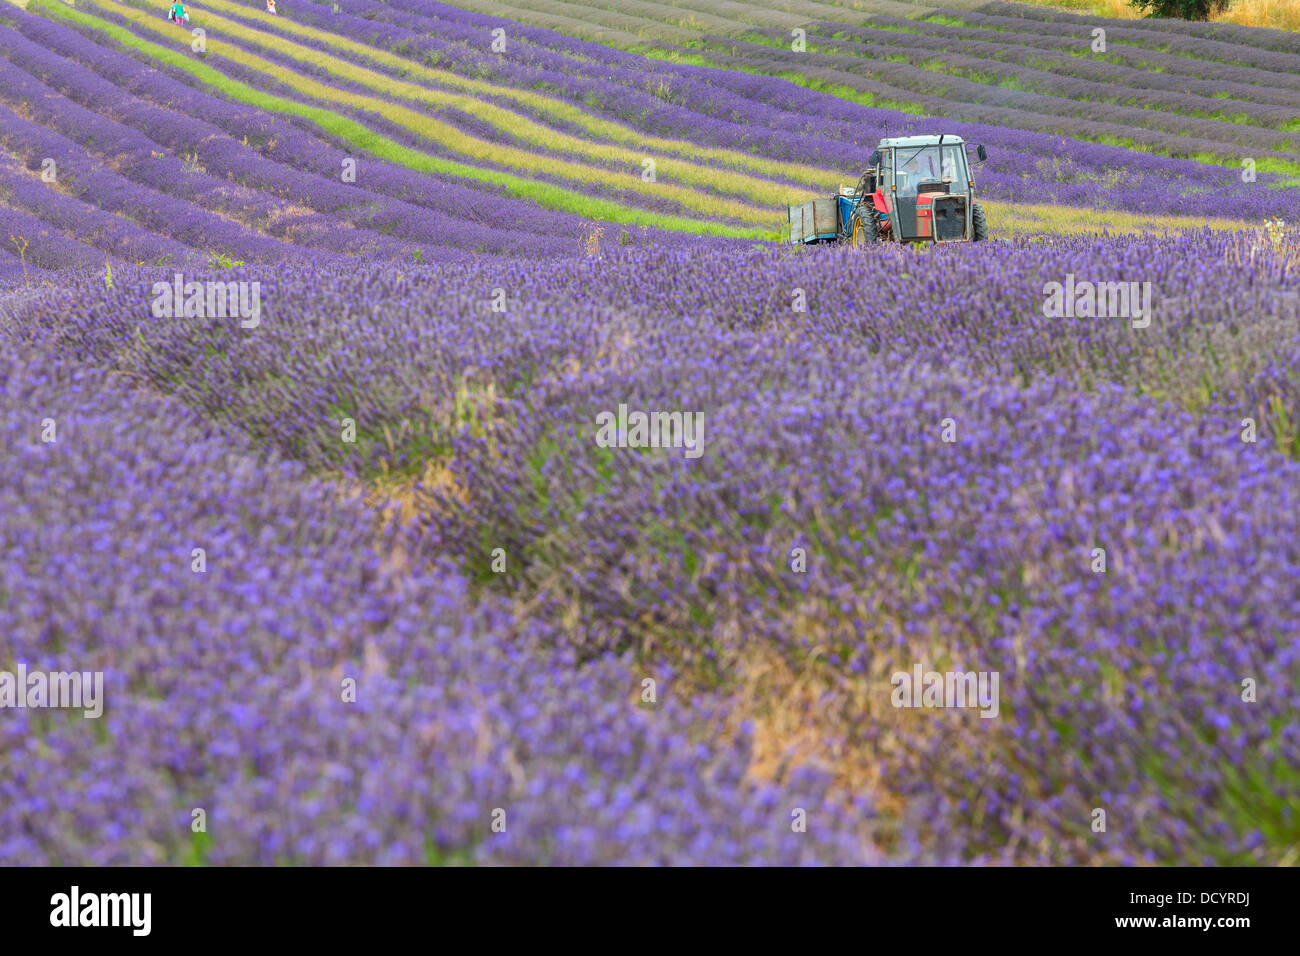 Harvesting the lavender crop Stock Photo